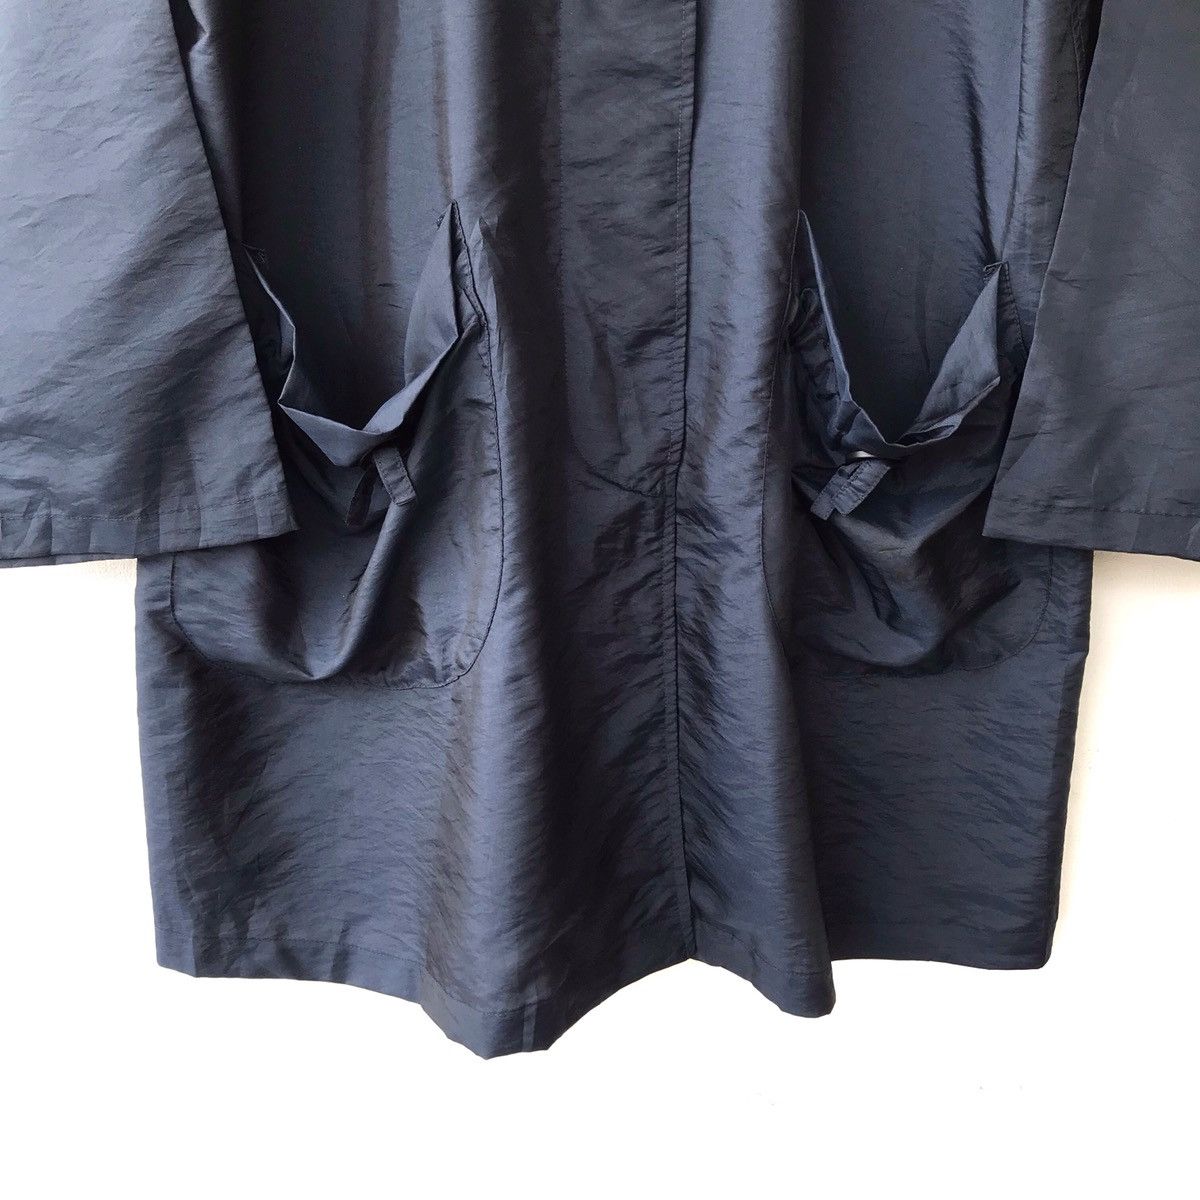 Moschino Cheap and Chic Moschino Ombrelli Nylon Windcoat Size S / US 4 / IT 40 - 4 Thumbnail